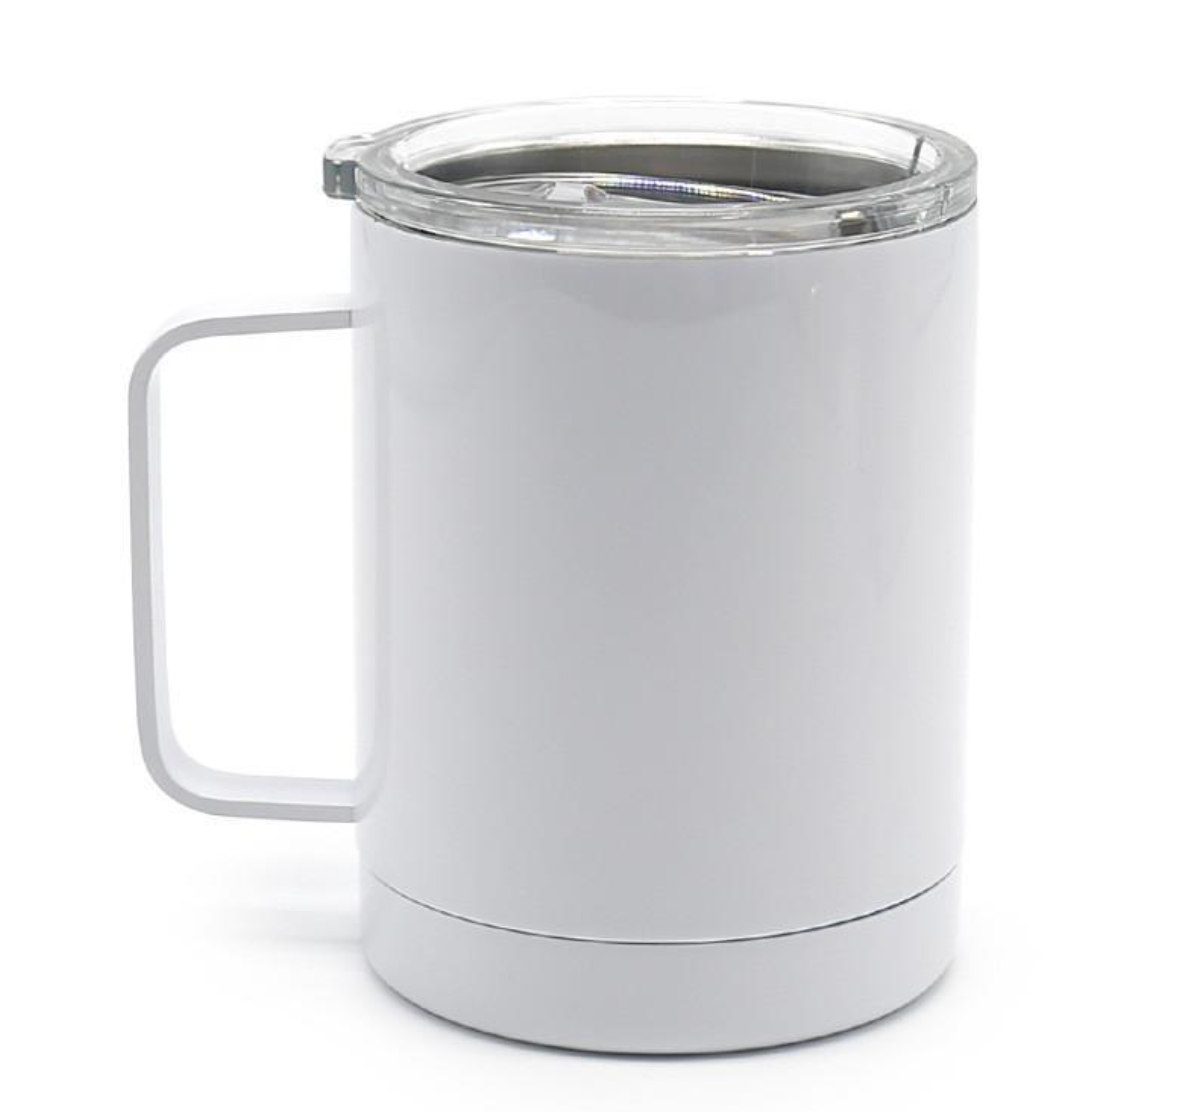 You’re My Cup of Tea Mug